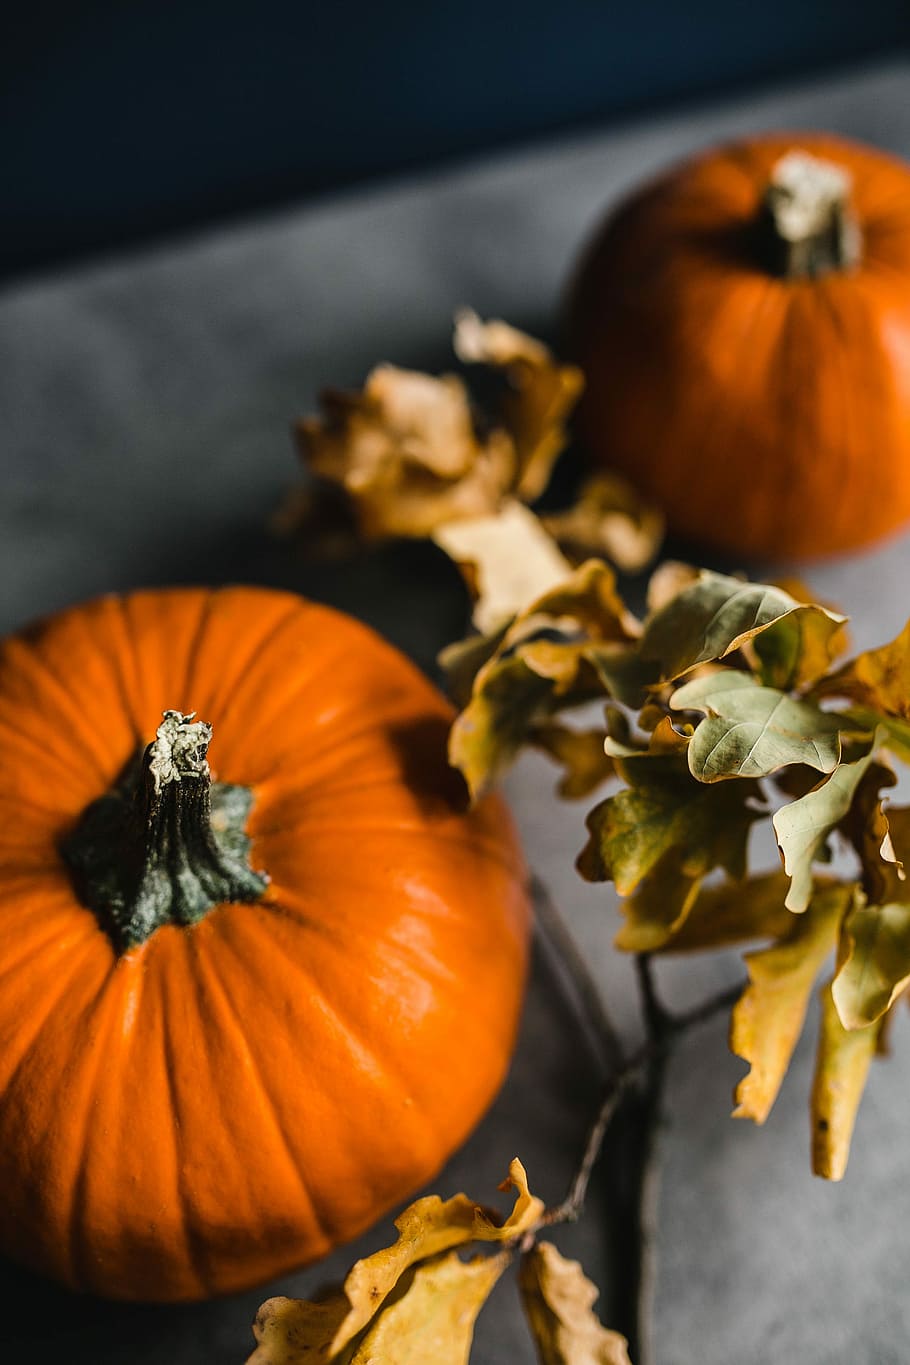 autumn pumpkin, Autumn, Pumpkin, fall, halloween, thanksgiving, orange Color, season, vegetable, decoration